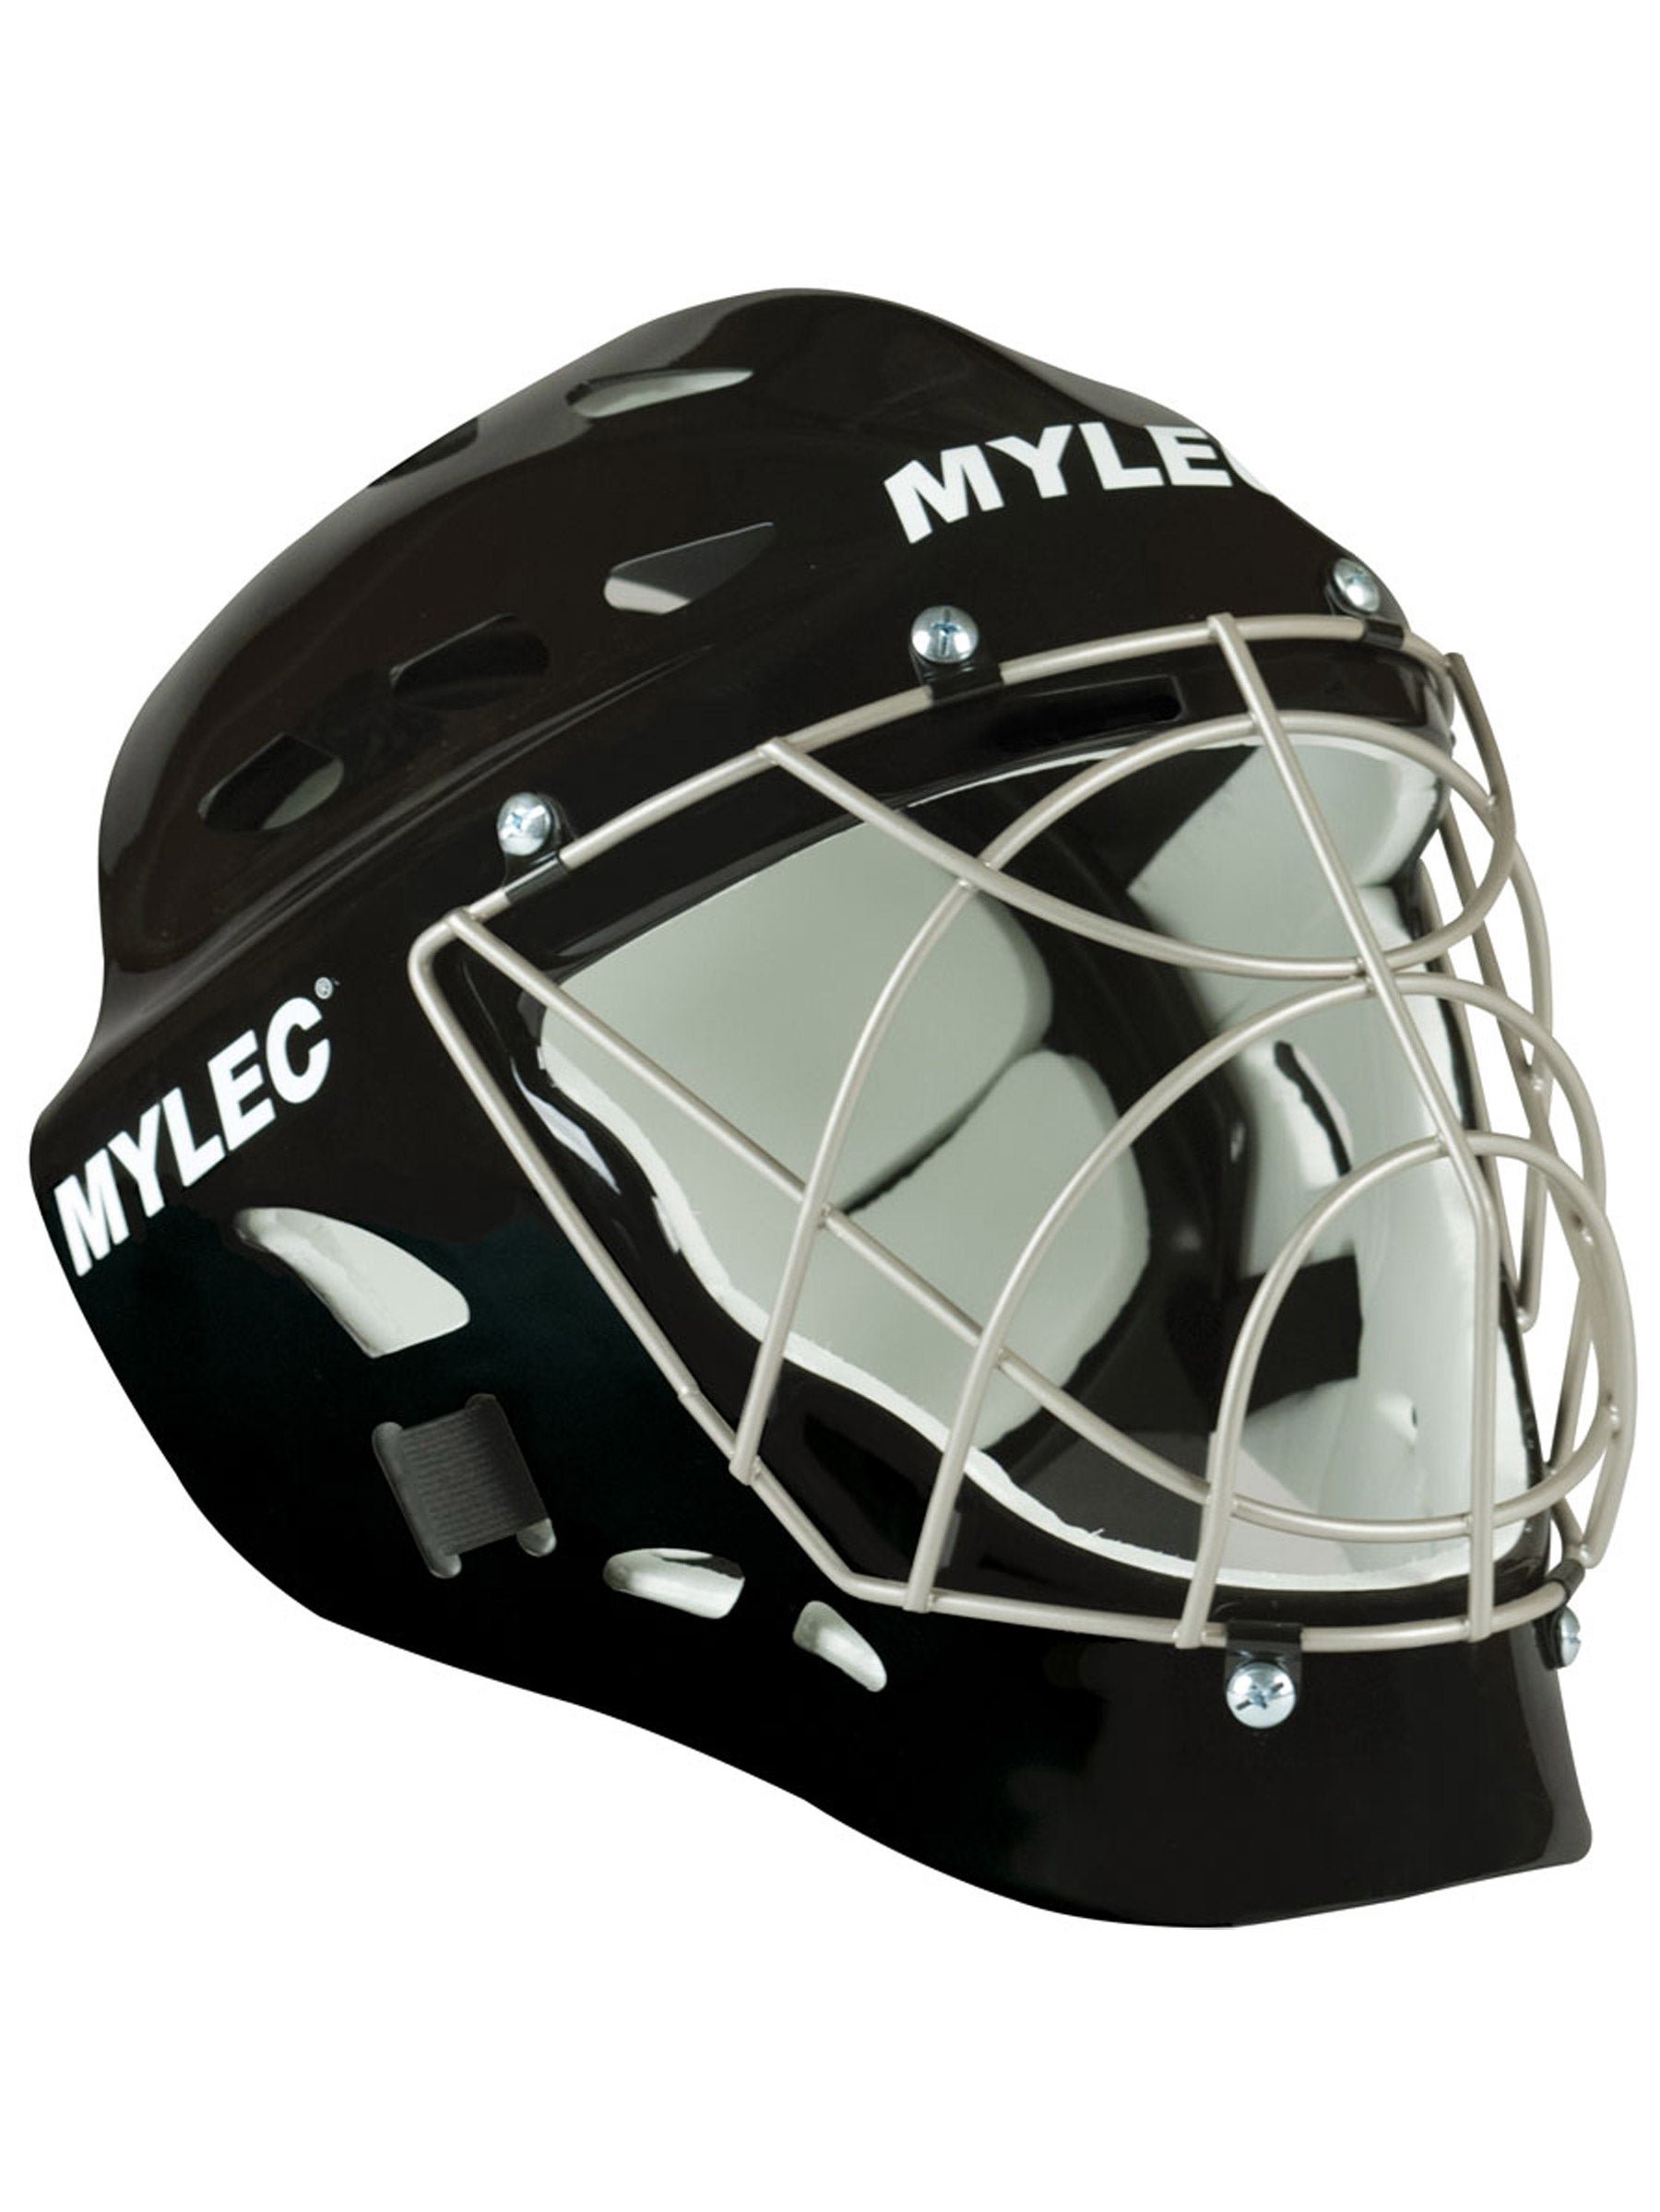 Mylec Ultra Pro II Goalie Mask